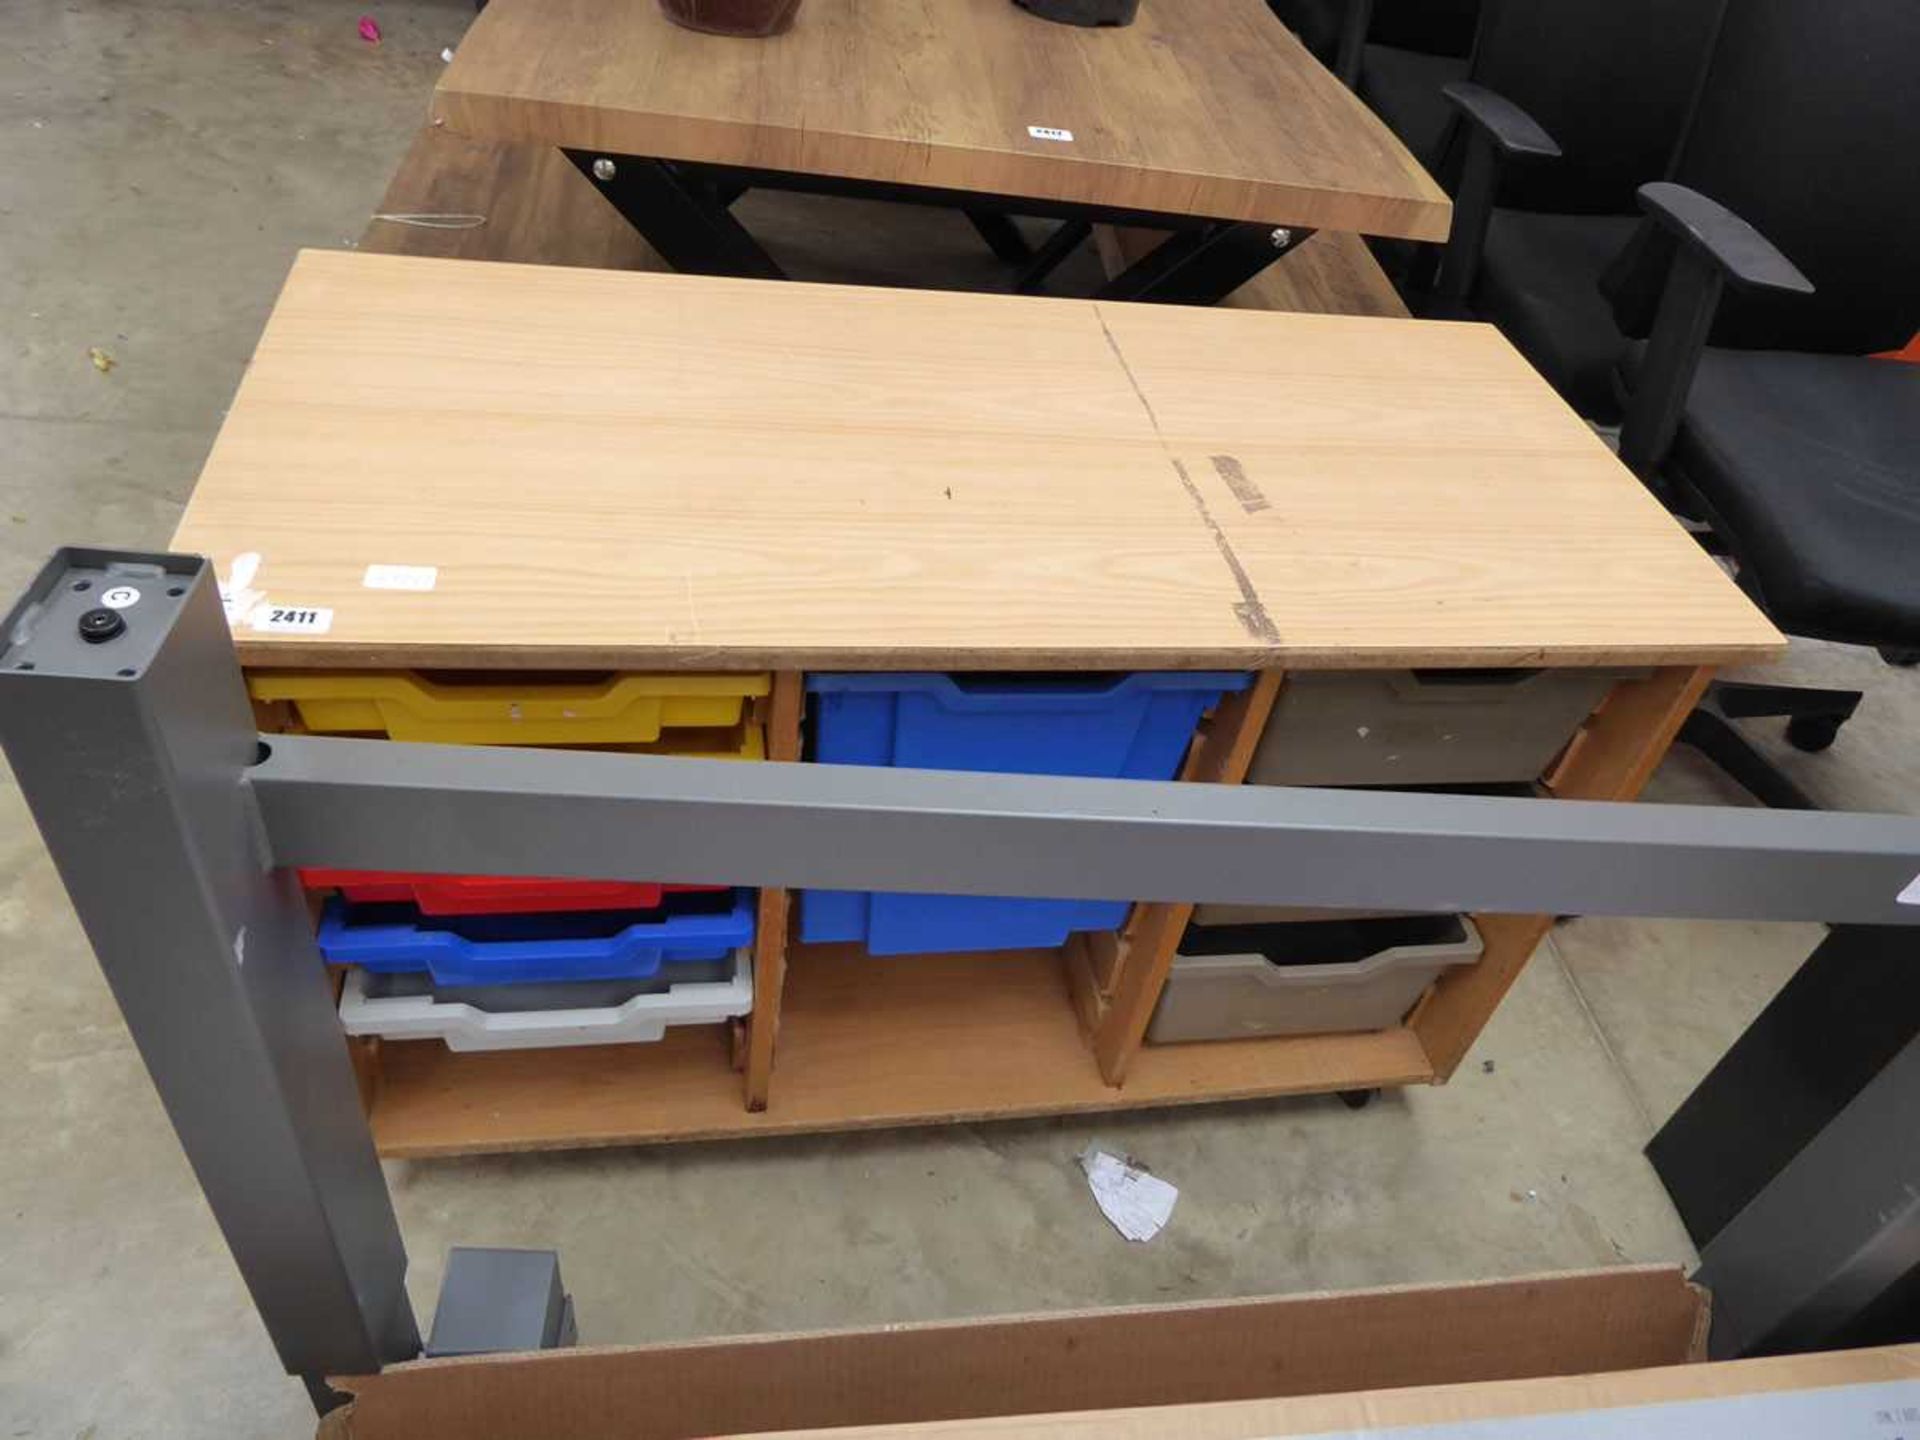 Children's classroom storage unit with trays